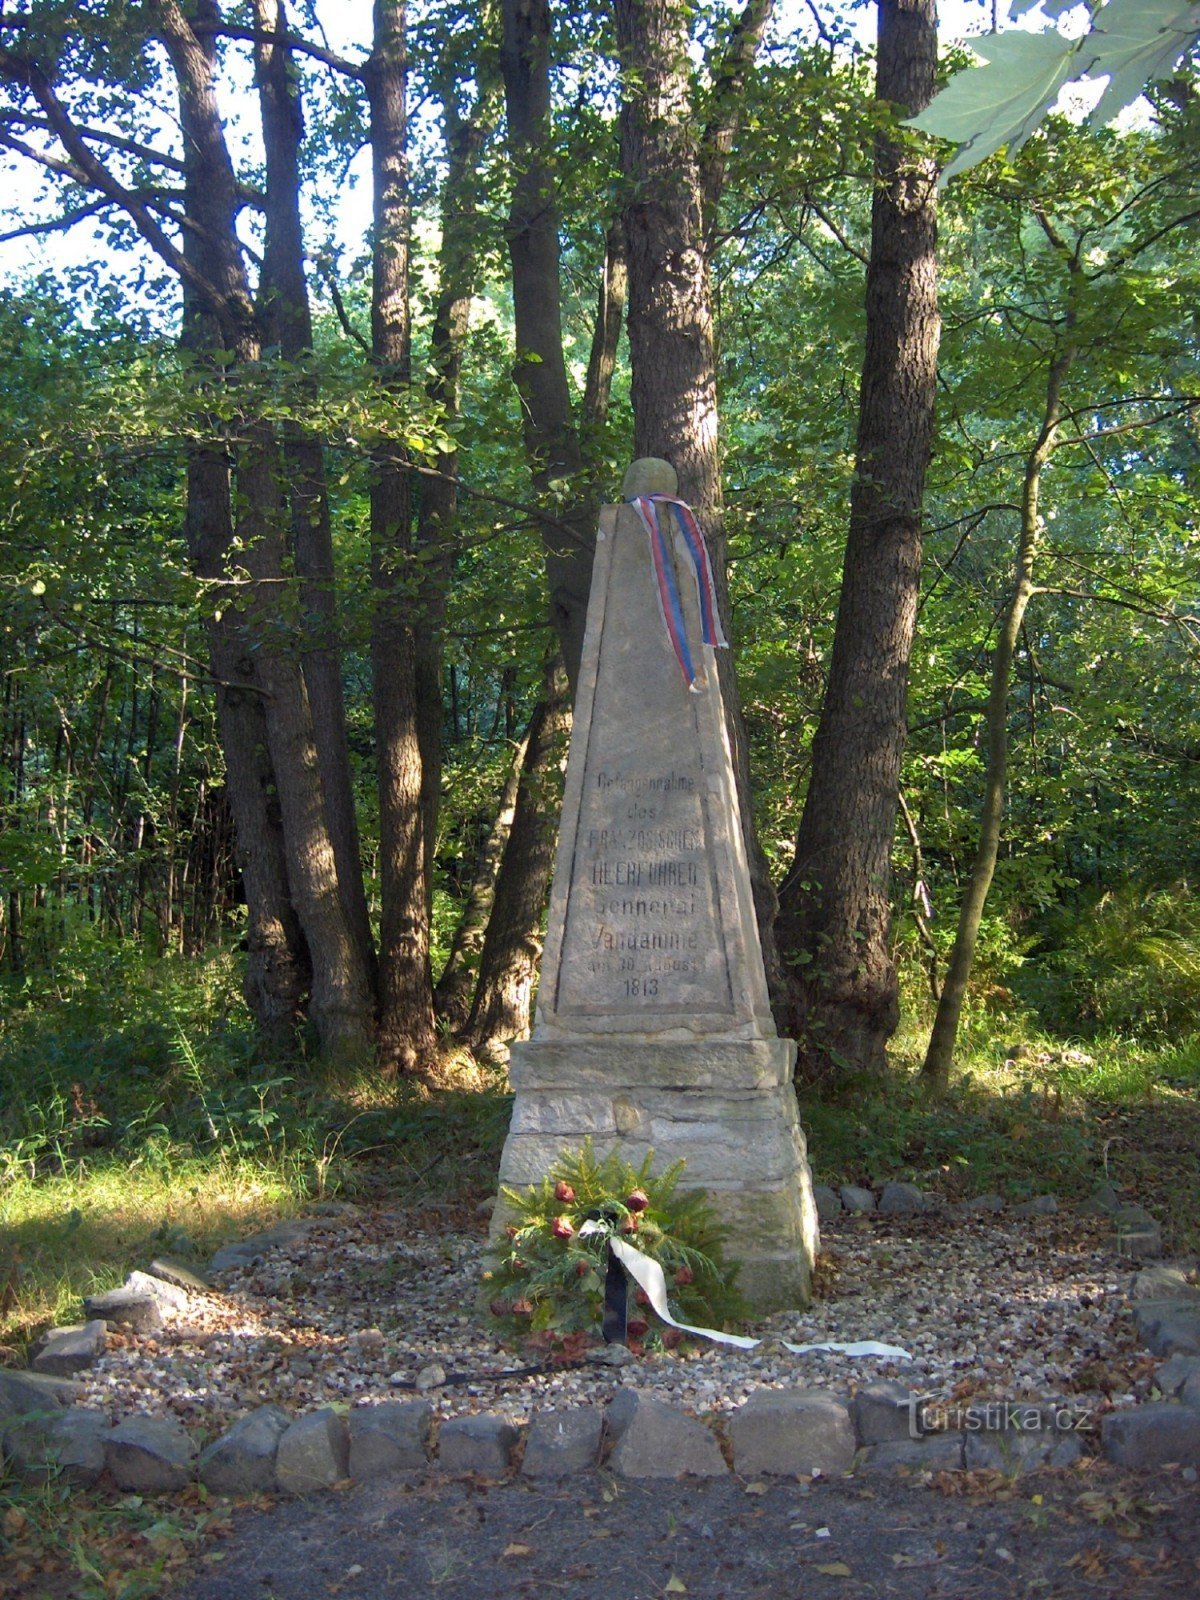 memorial à captura do general Vandamme